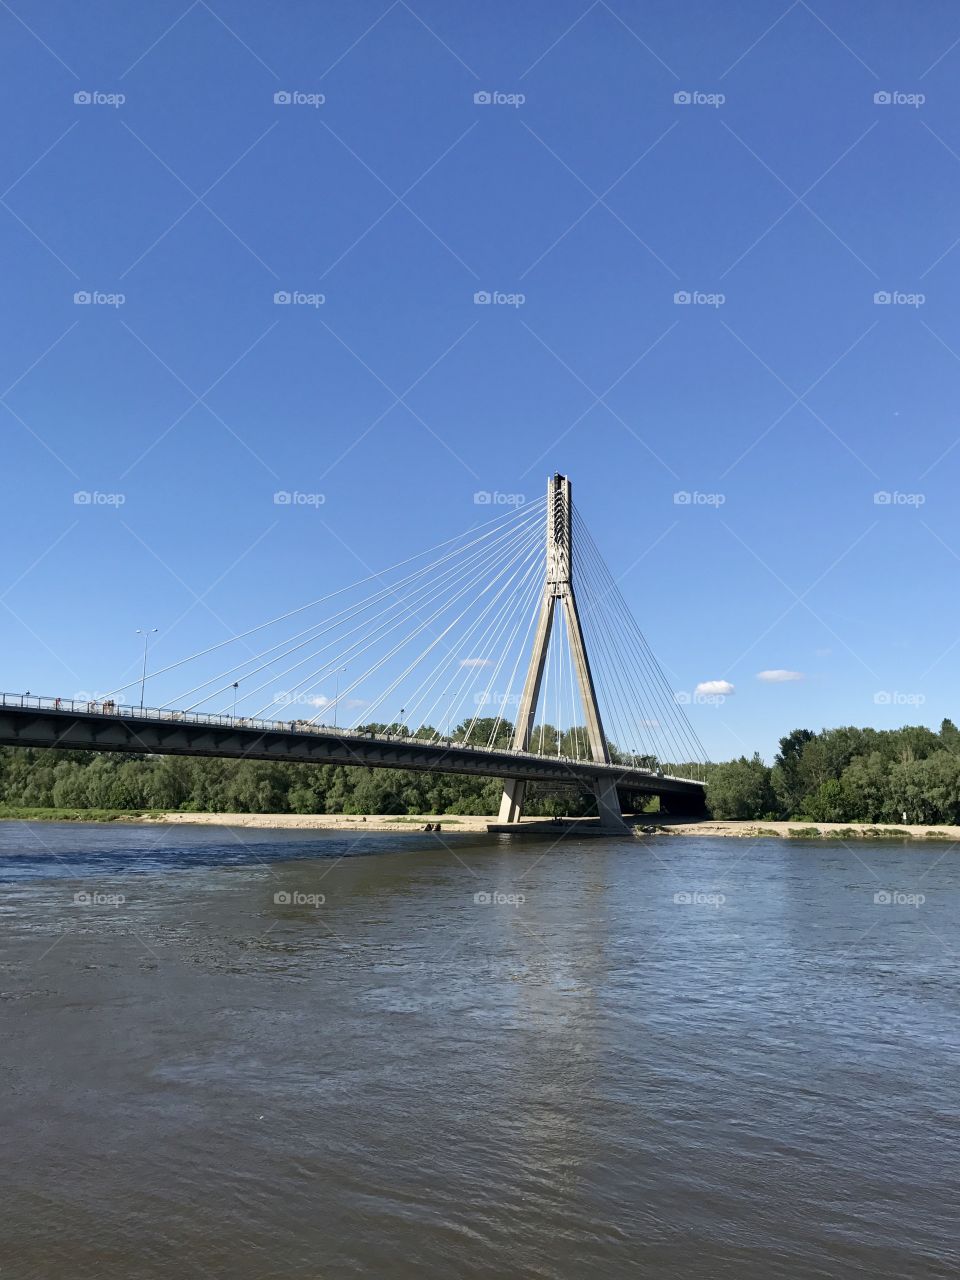 Vistula river